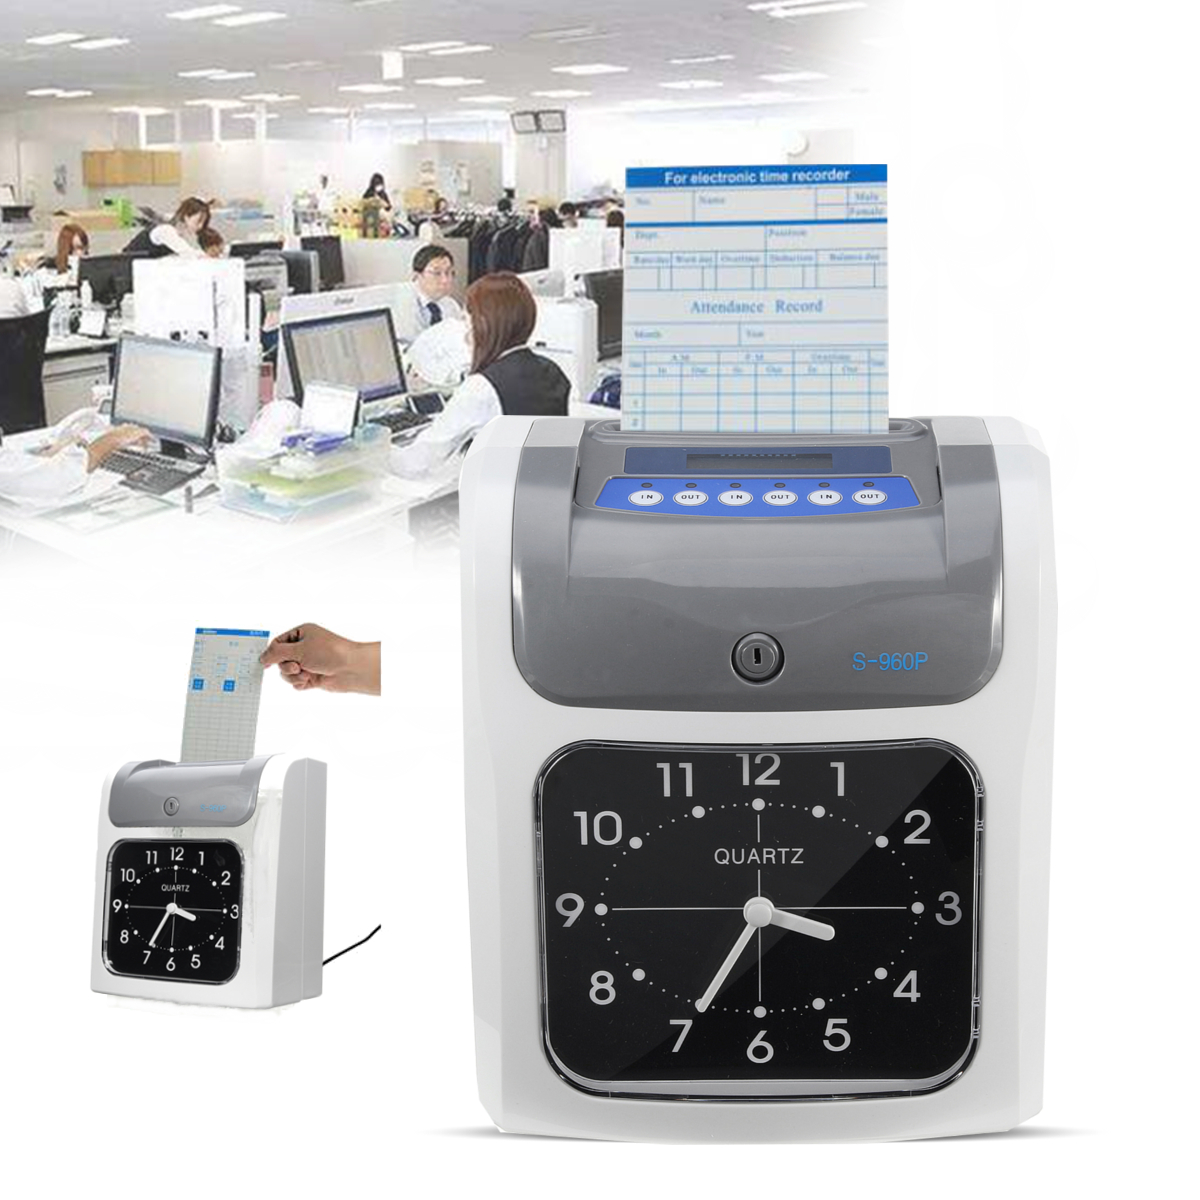 Display-100-240V-Employee-Attendance-Machine-Punch-Time-Clock-Payroll-Recorder-Equipment-1348166